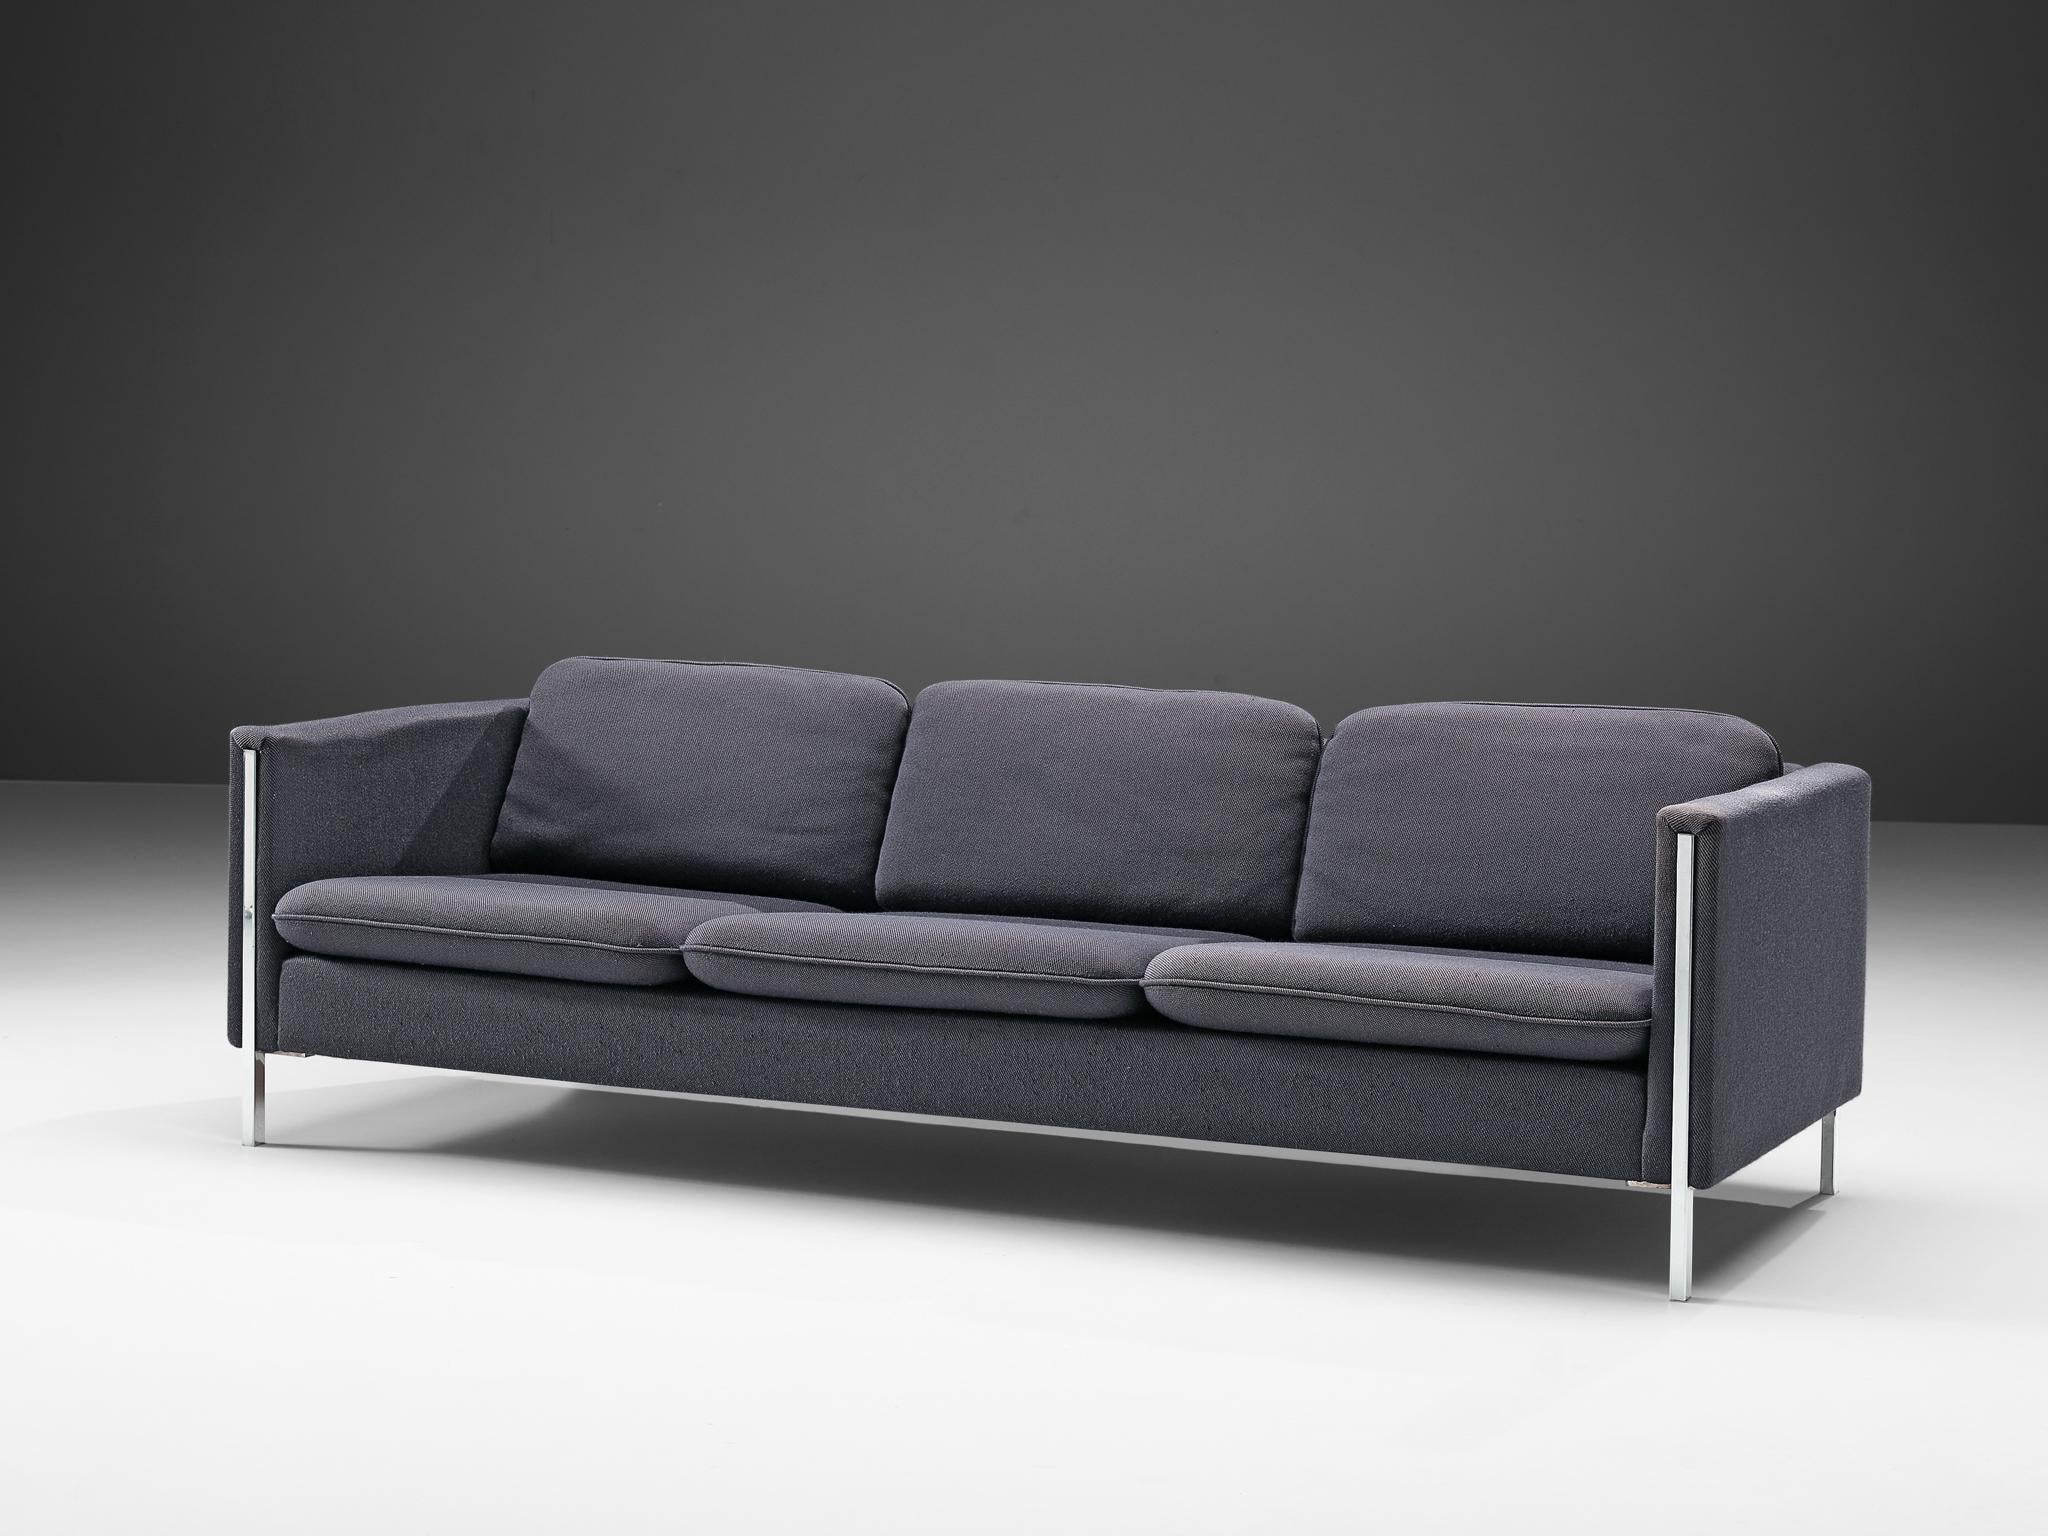 Pierre Paulin for Artifort Sofa in Blue Upholstery